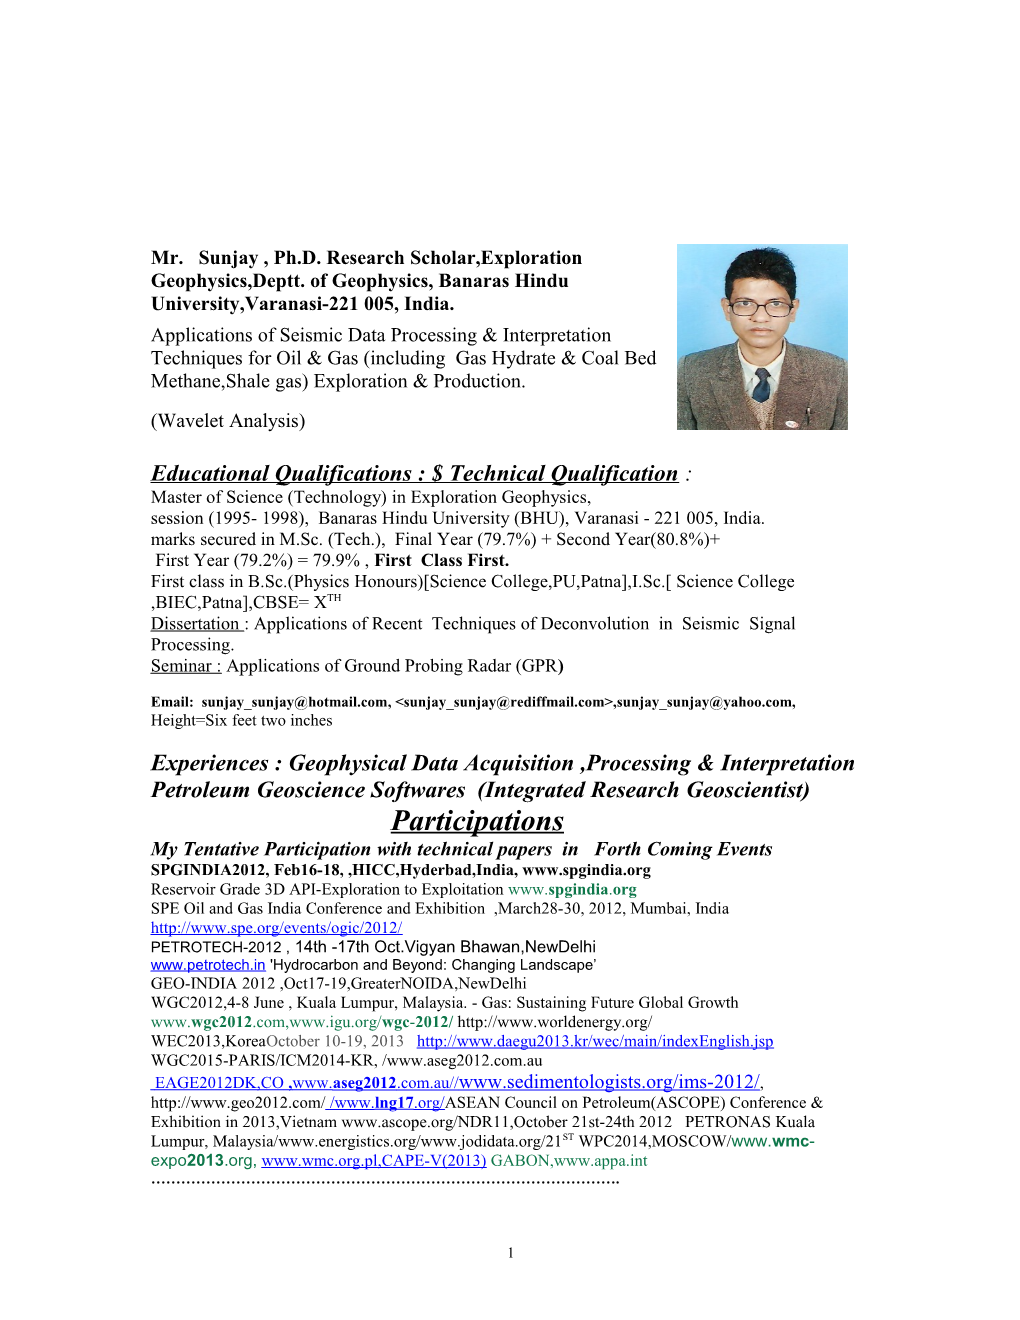 Mr. Sunjay , Ph.D. Research Scholar,Exploration Geophysics,Deptt. of Geophysics, Banaras